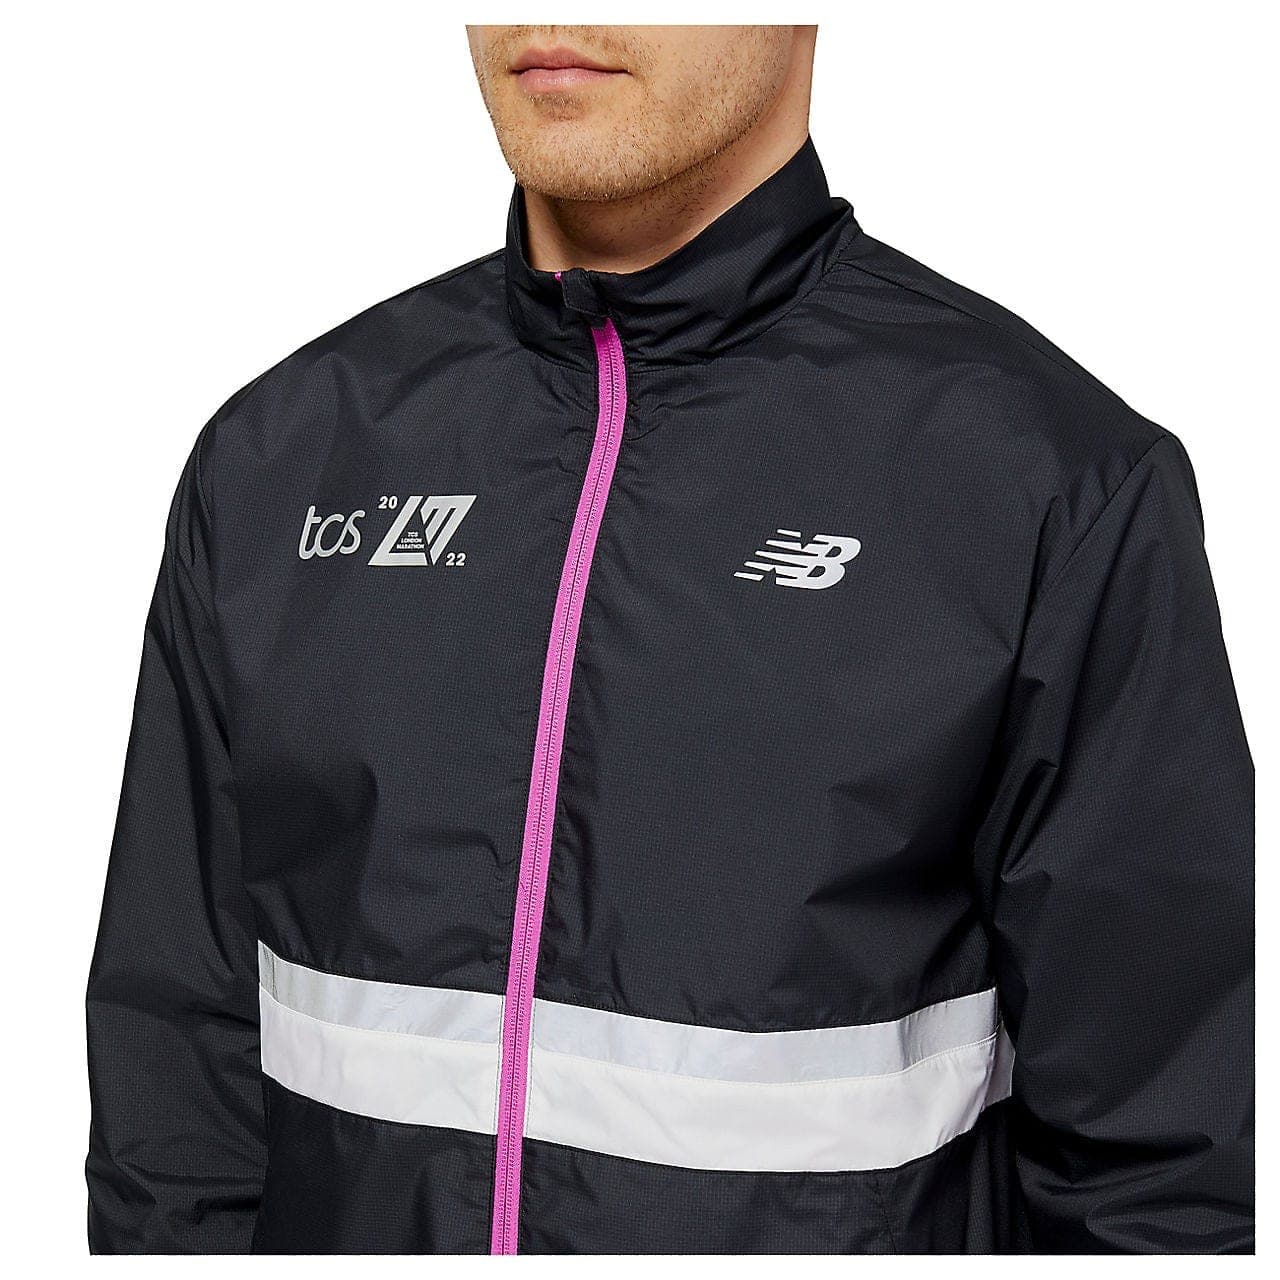 New Balance London Marathon Jacket (Men's) - Black